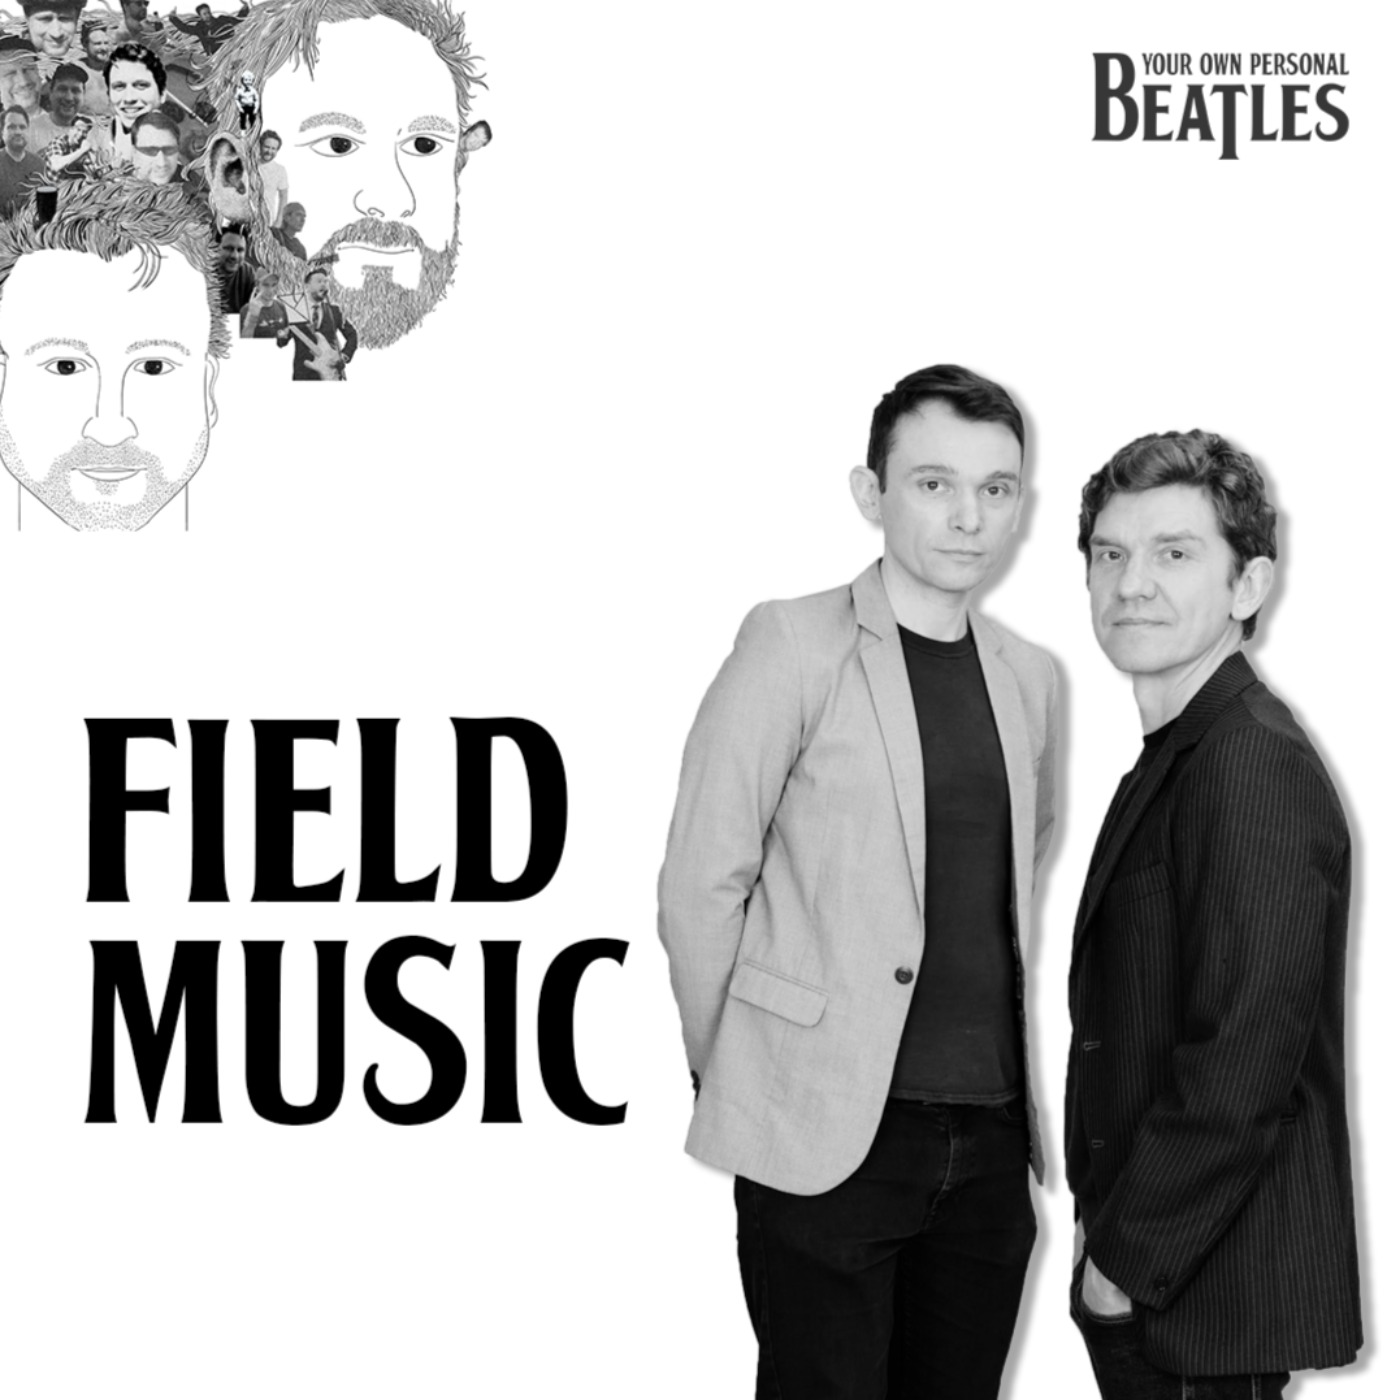 Field Music's Personal Beatles